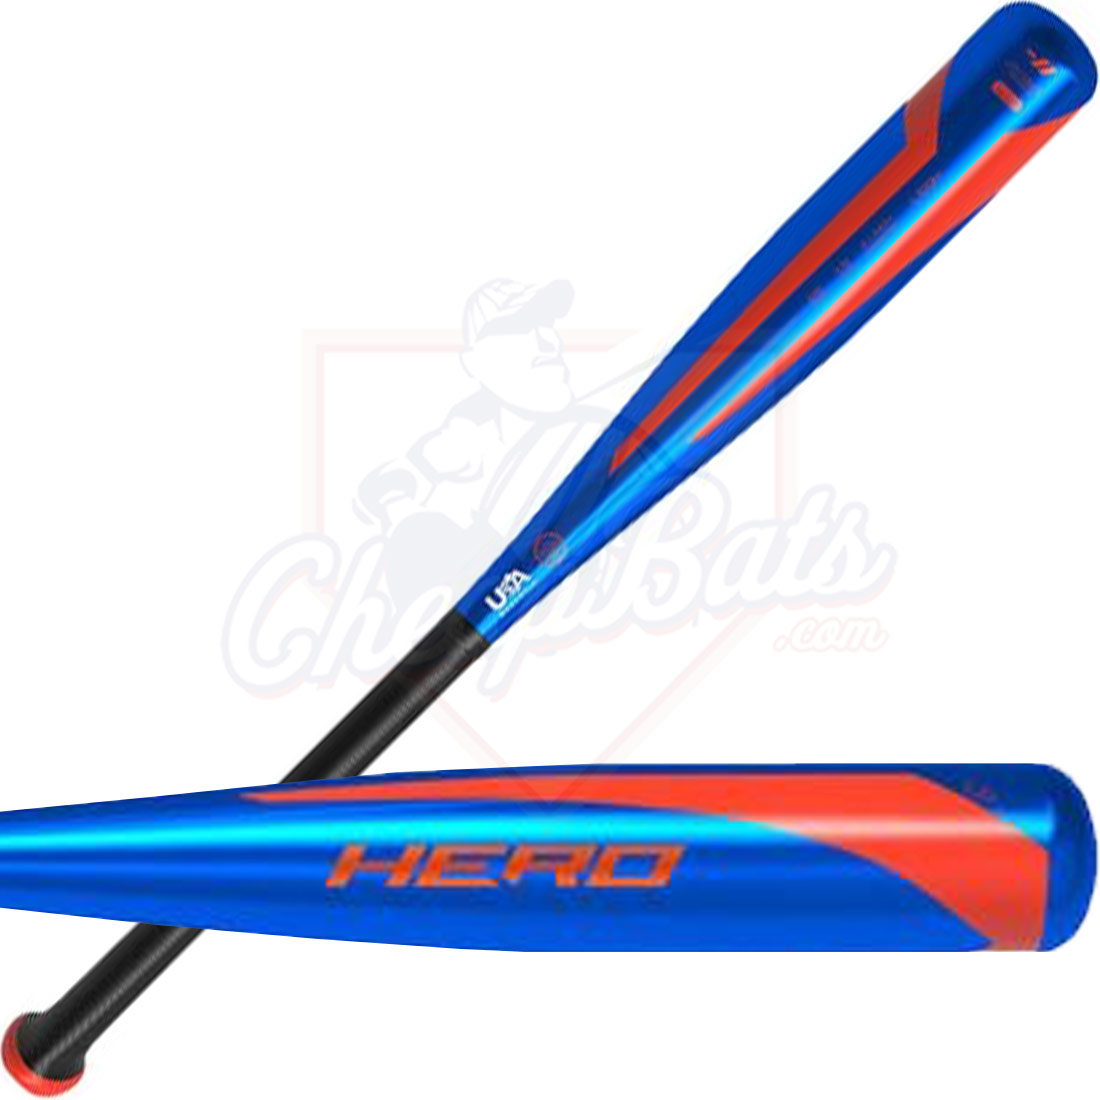 2021 Axe Hero Youth USA Tee Ball Bat -11oz L129H